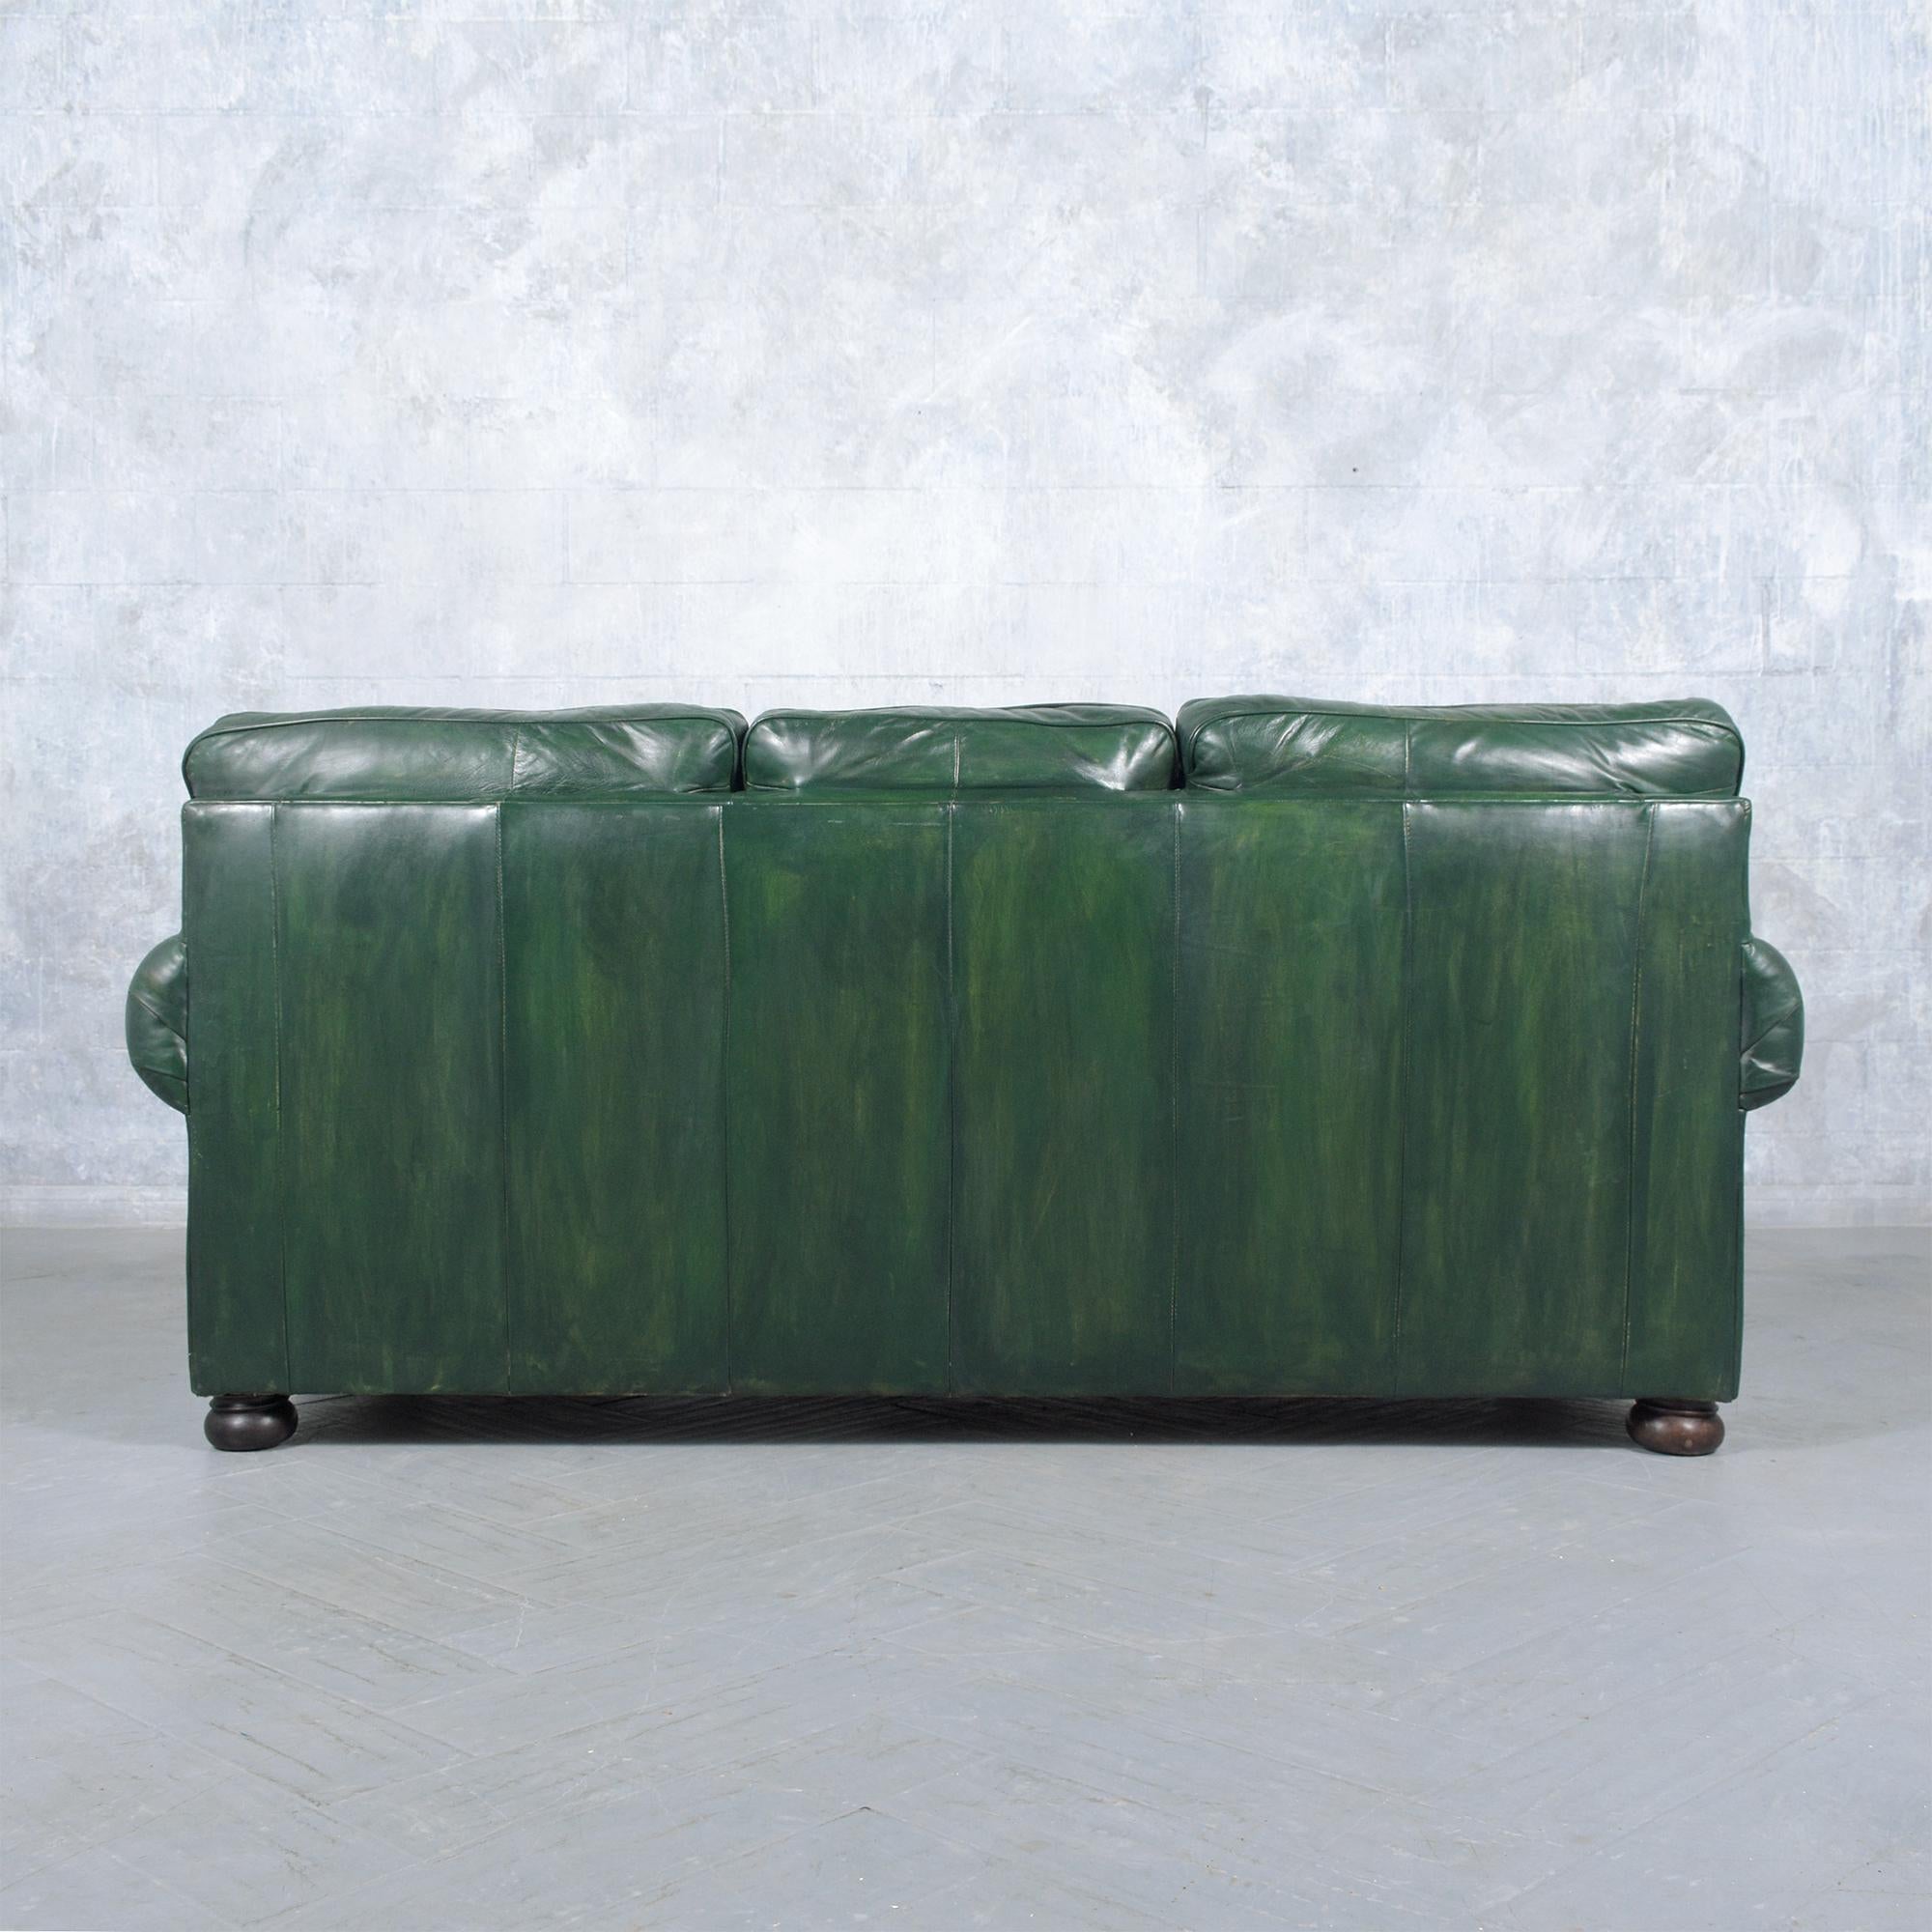 Elegant 1980s Restored Leather Sofa: A Blend of Vintage and Modern For Sale 6